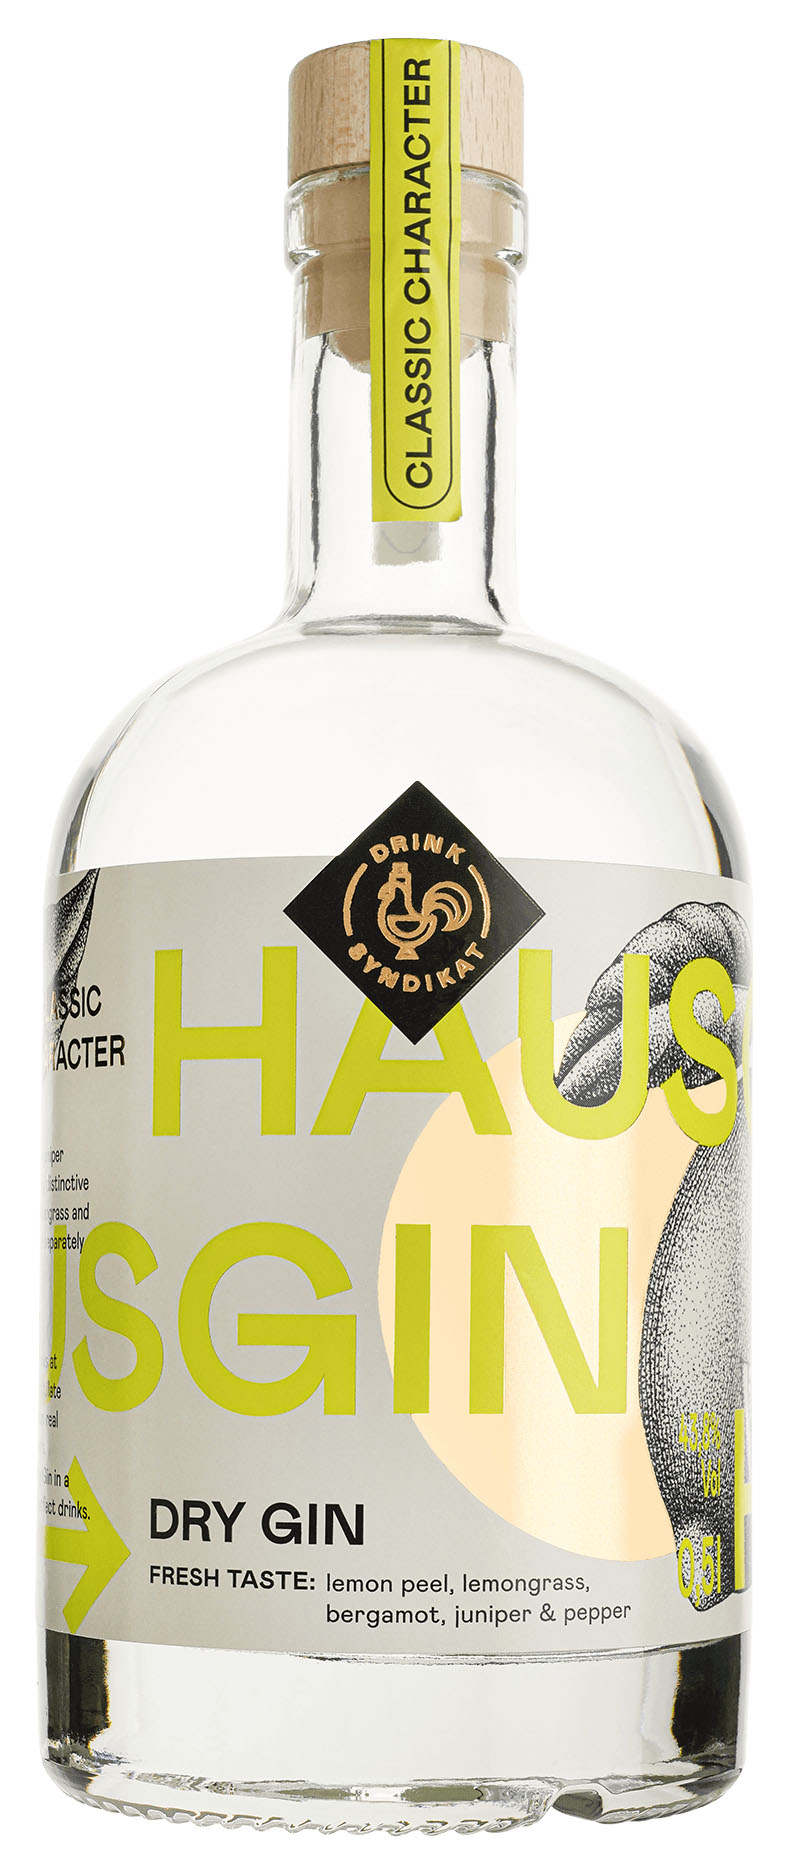 Hausgin Dry Gin by Drink Syndikat 43.8% 0,5l